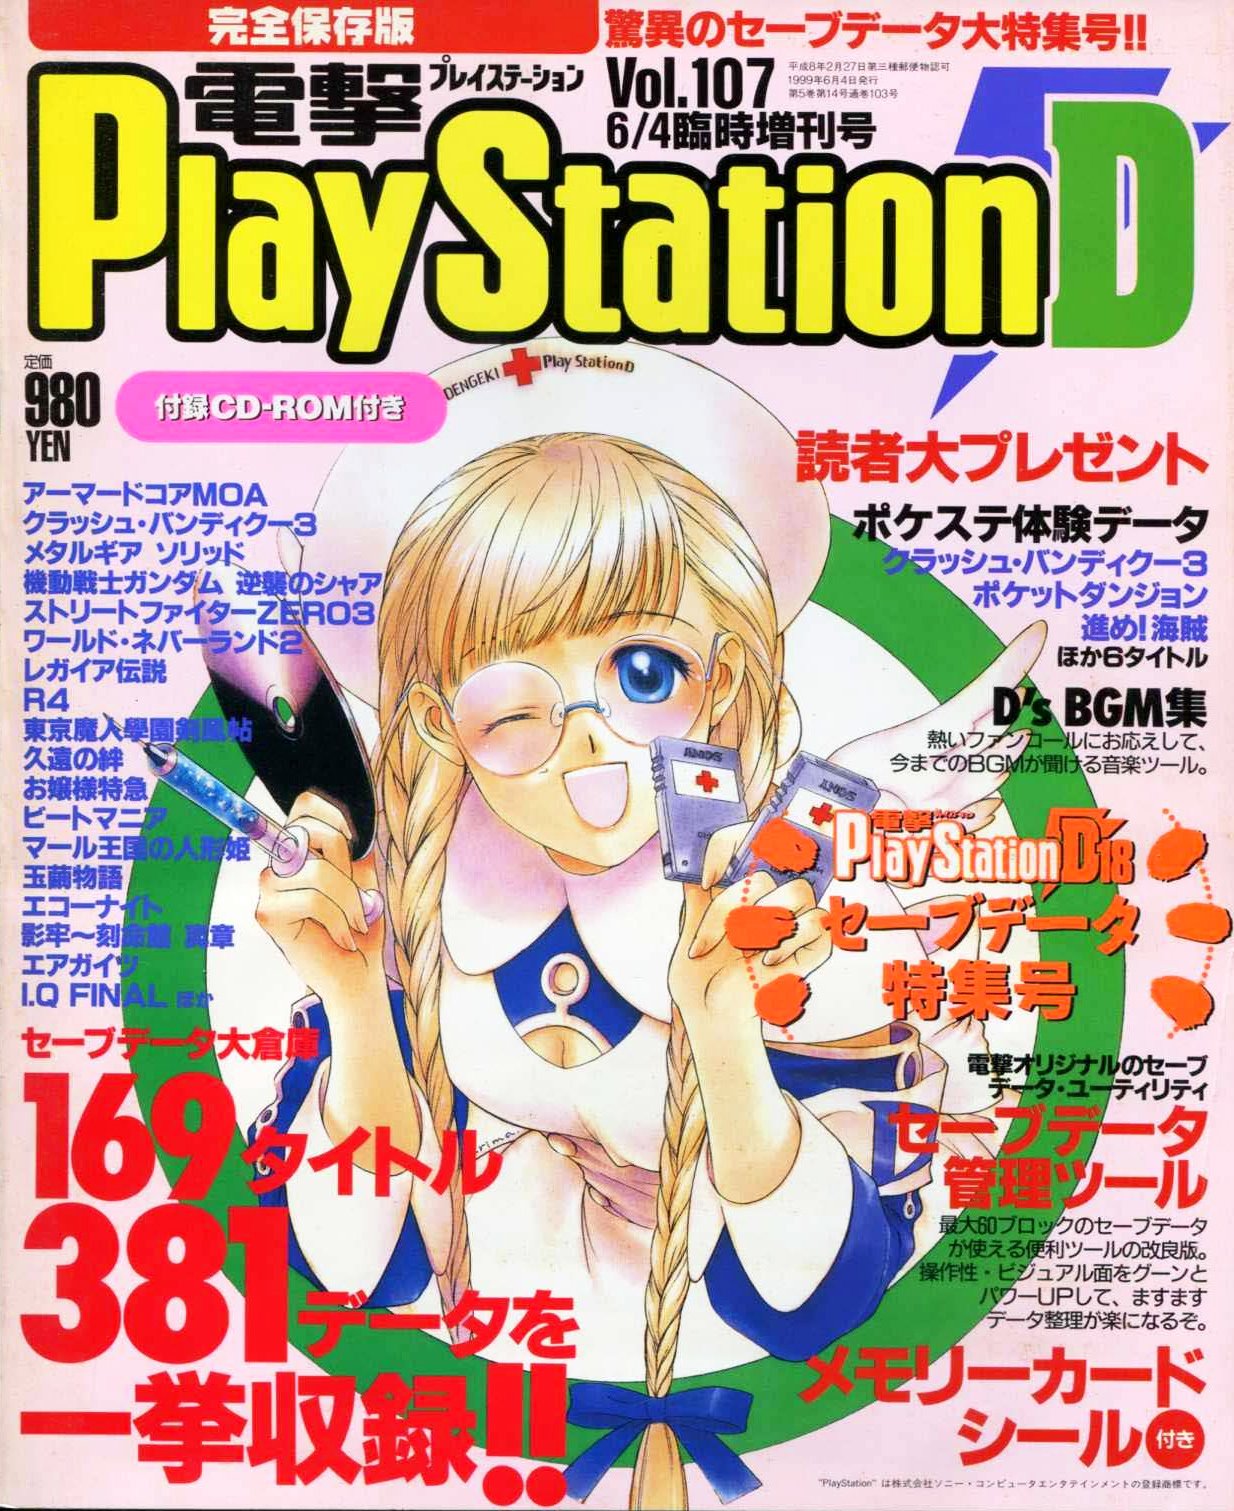 Dengeki PlayStation 107 (June 4, 1999)